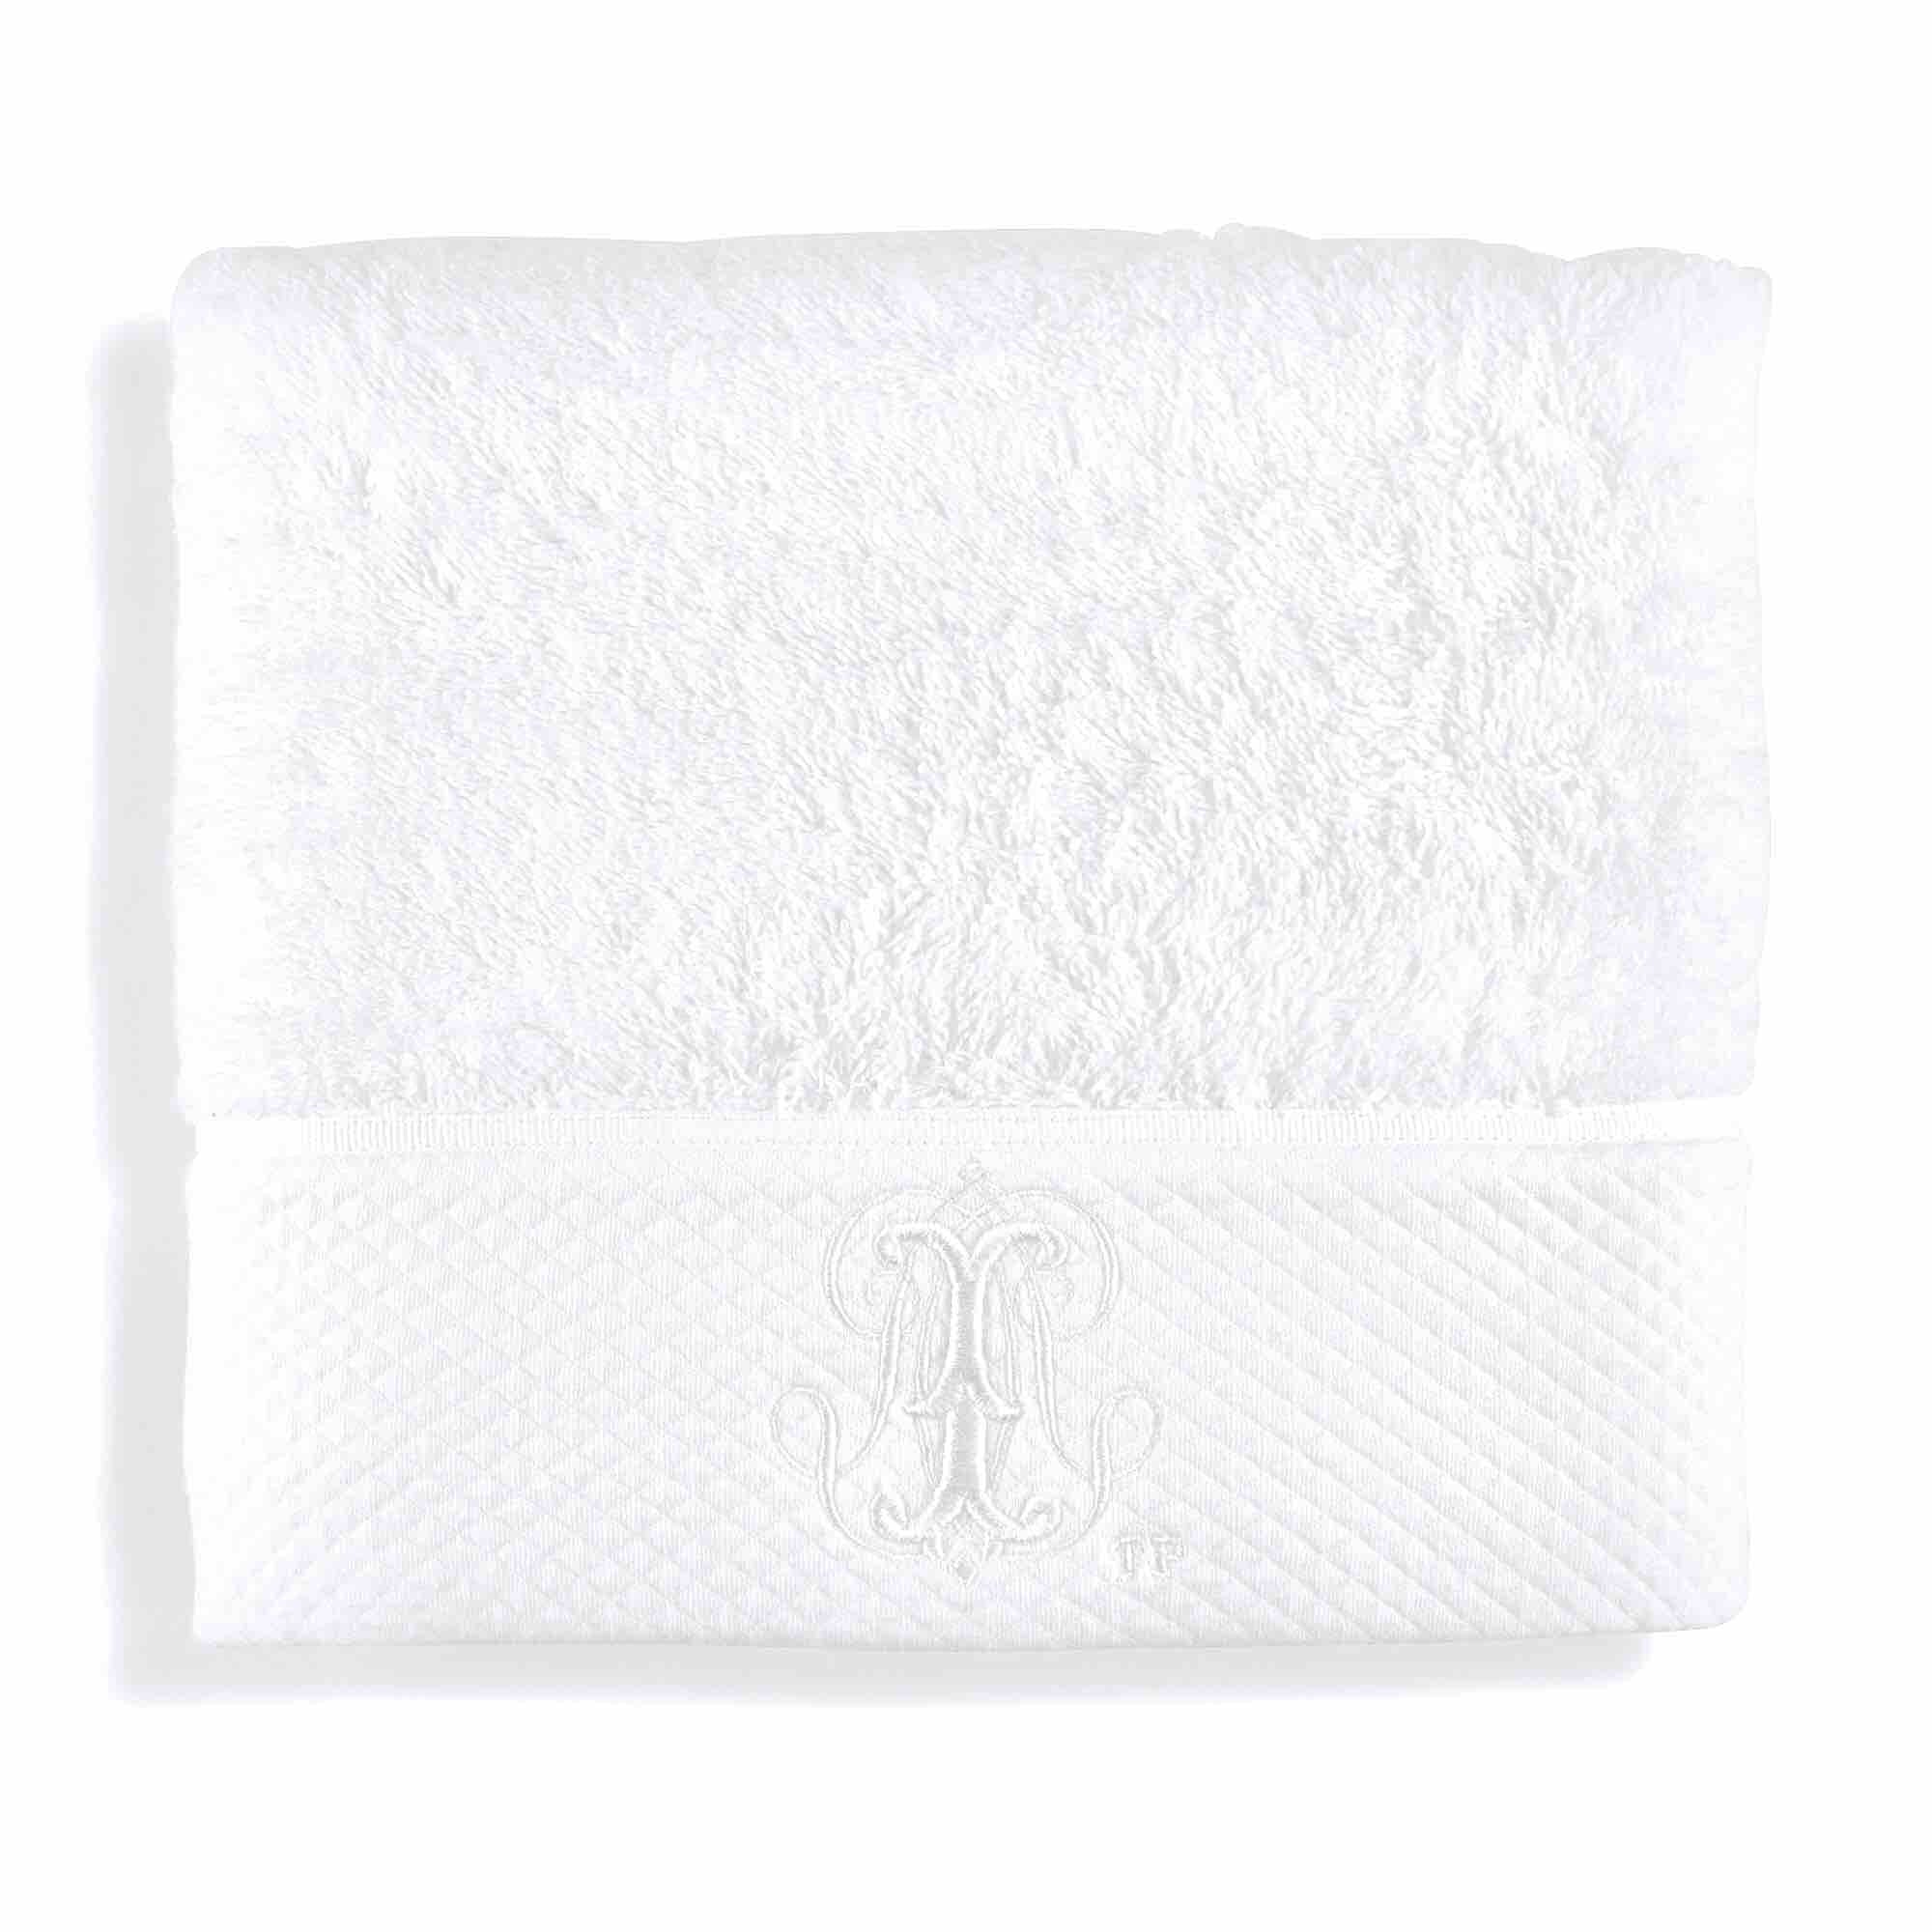 Theophile & Patachou Bath Towel - Royal White